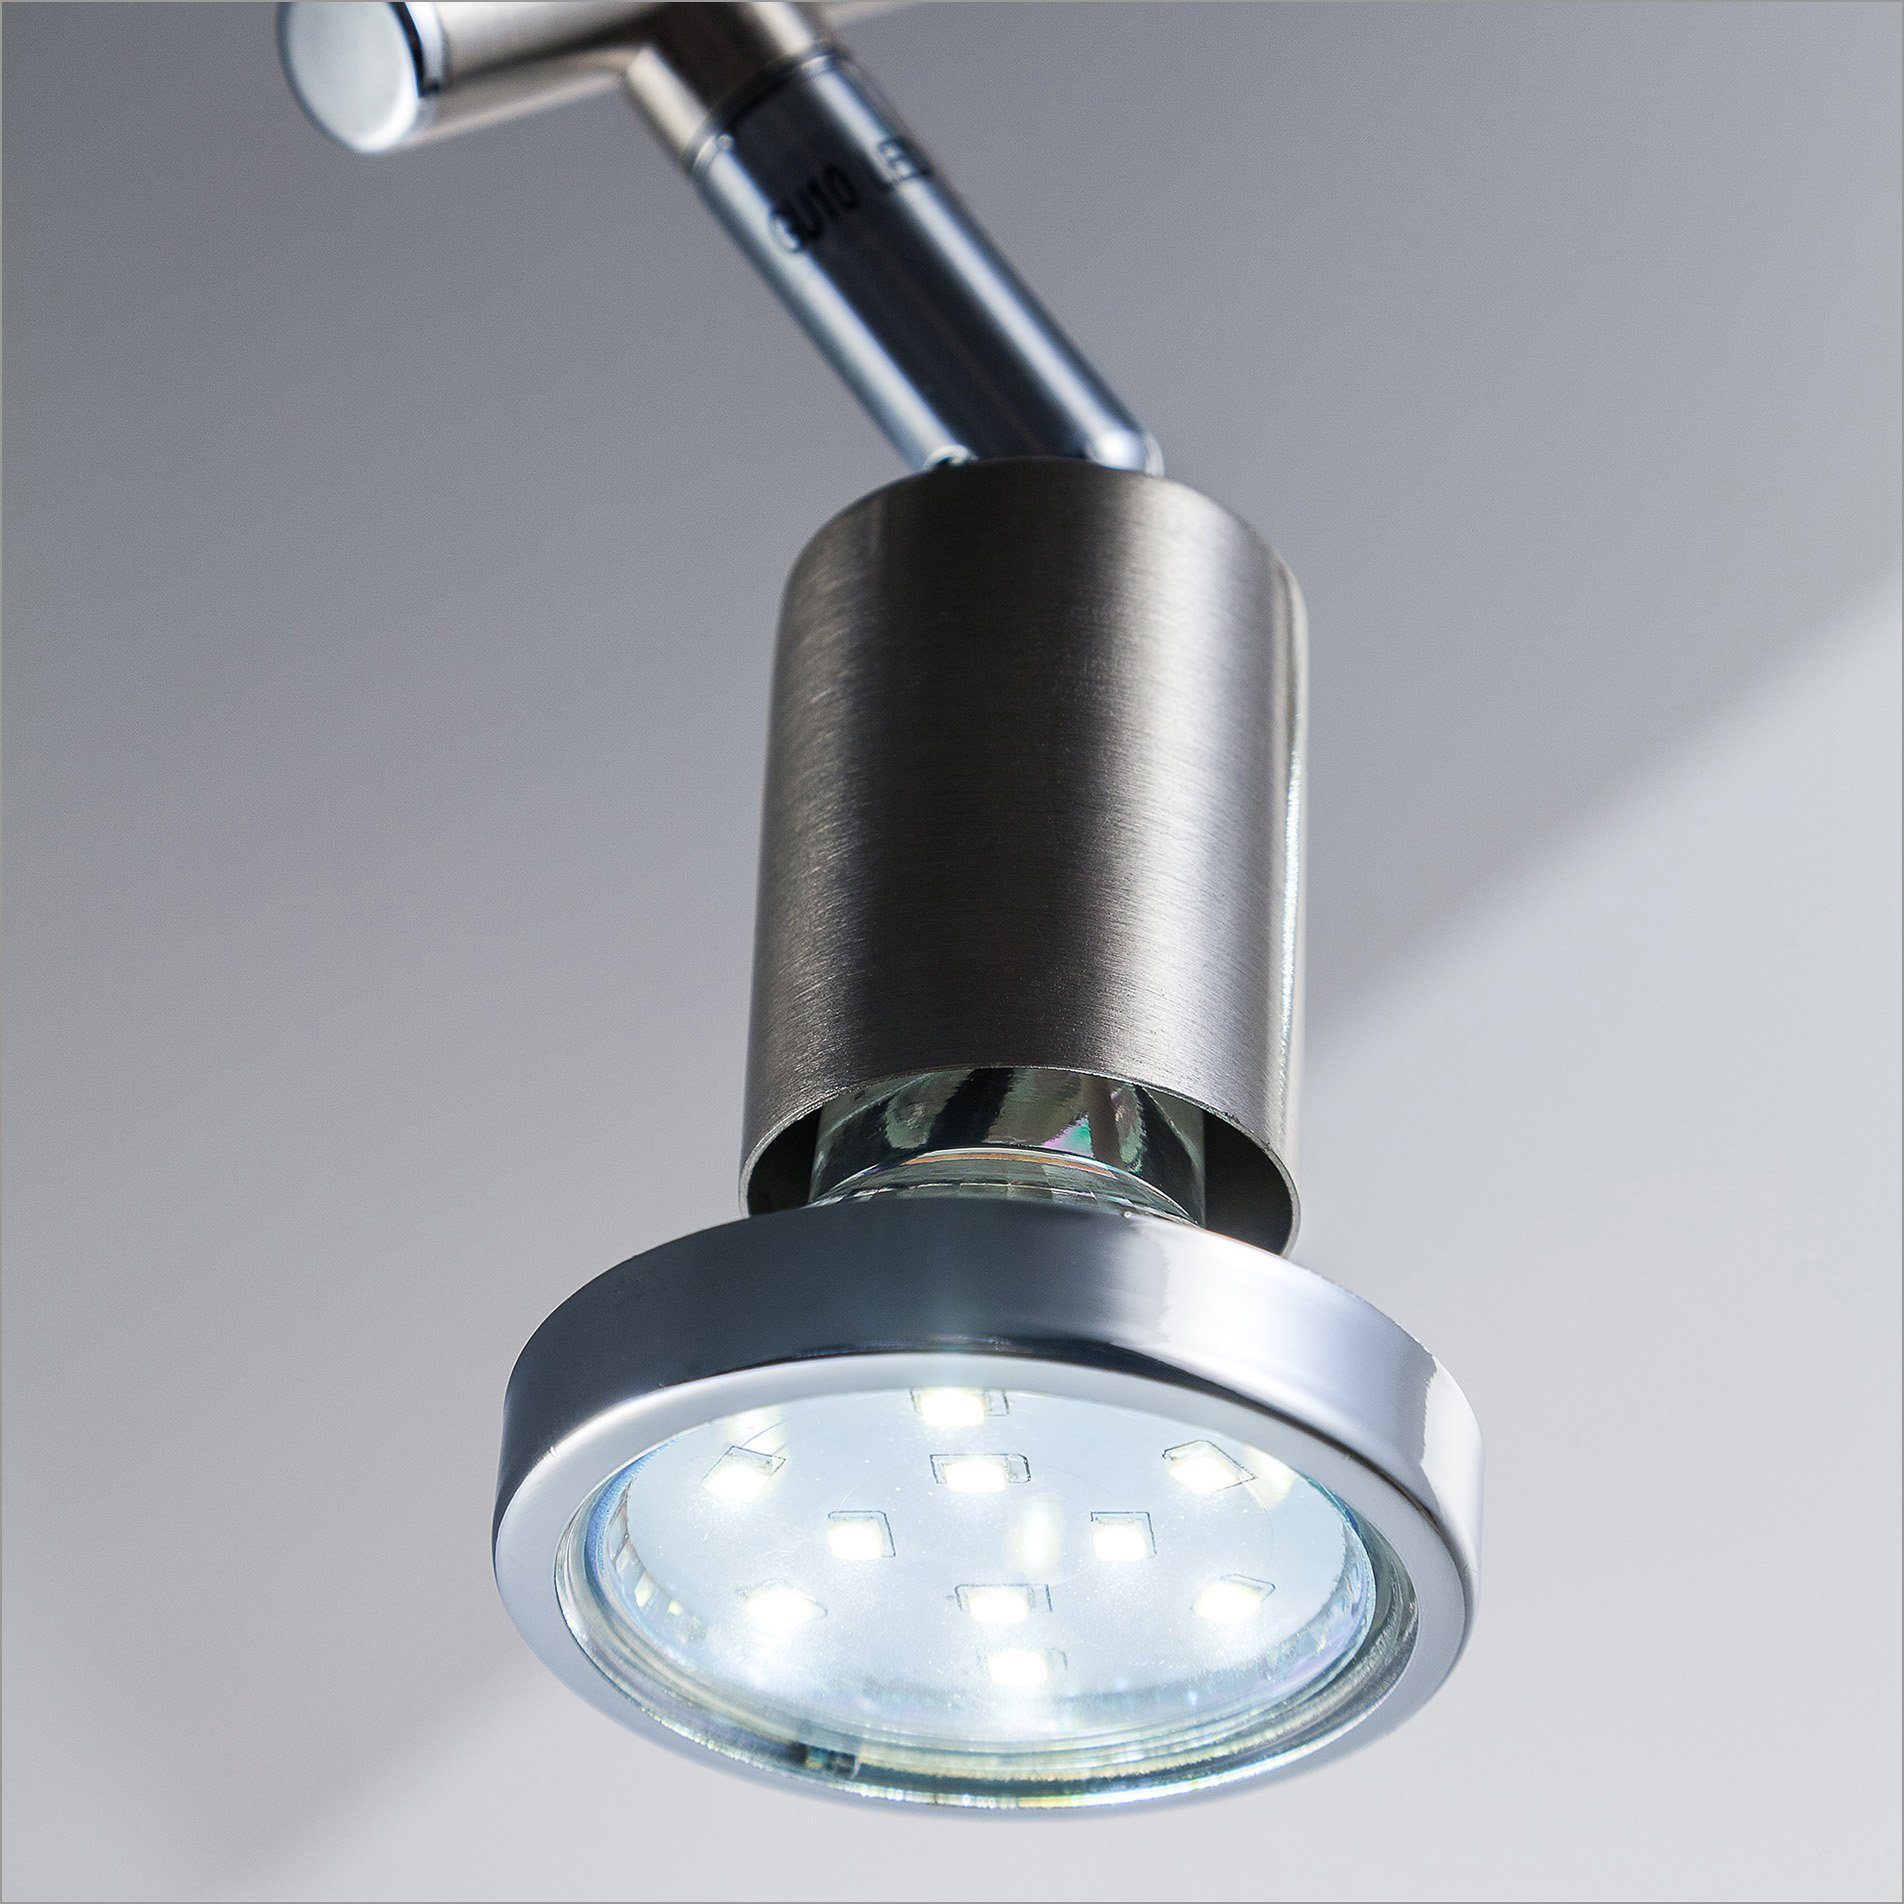 LED 3W LED Lumen, 250 LED Deckenstrahler, inkl. Warmweiß, Mika, wechselbar, B.K.Licht schwenkbar, Deckenspots GU10 warmweiß